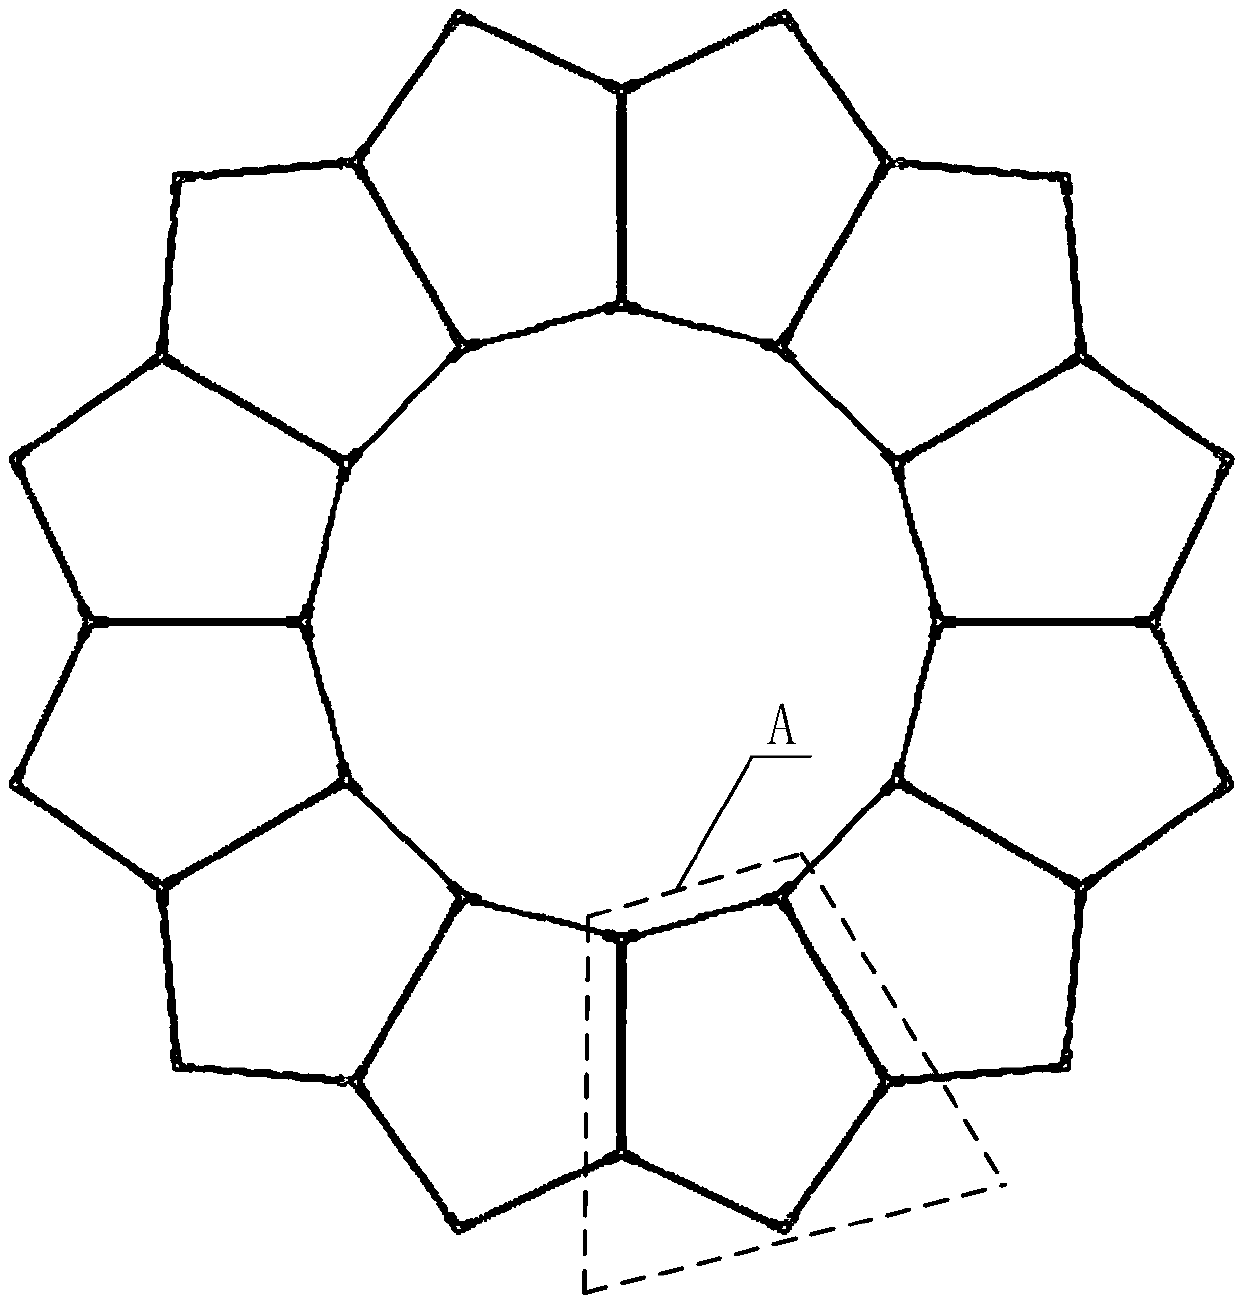 Sun-flower-shaped annular truss deployable antenna mechanism based on shear elements